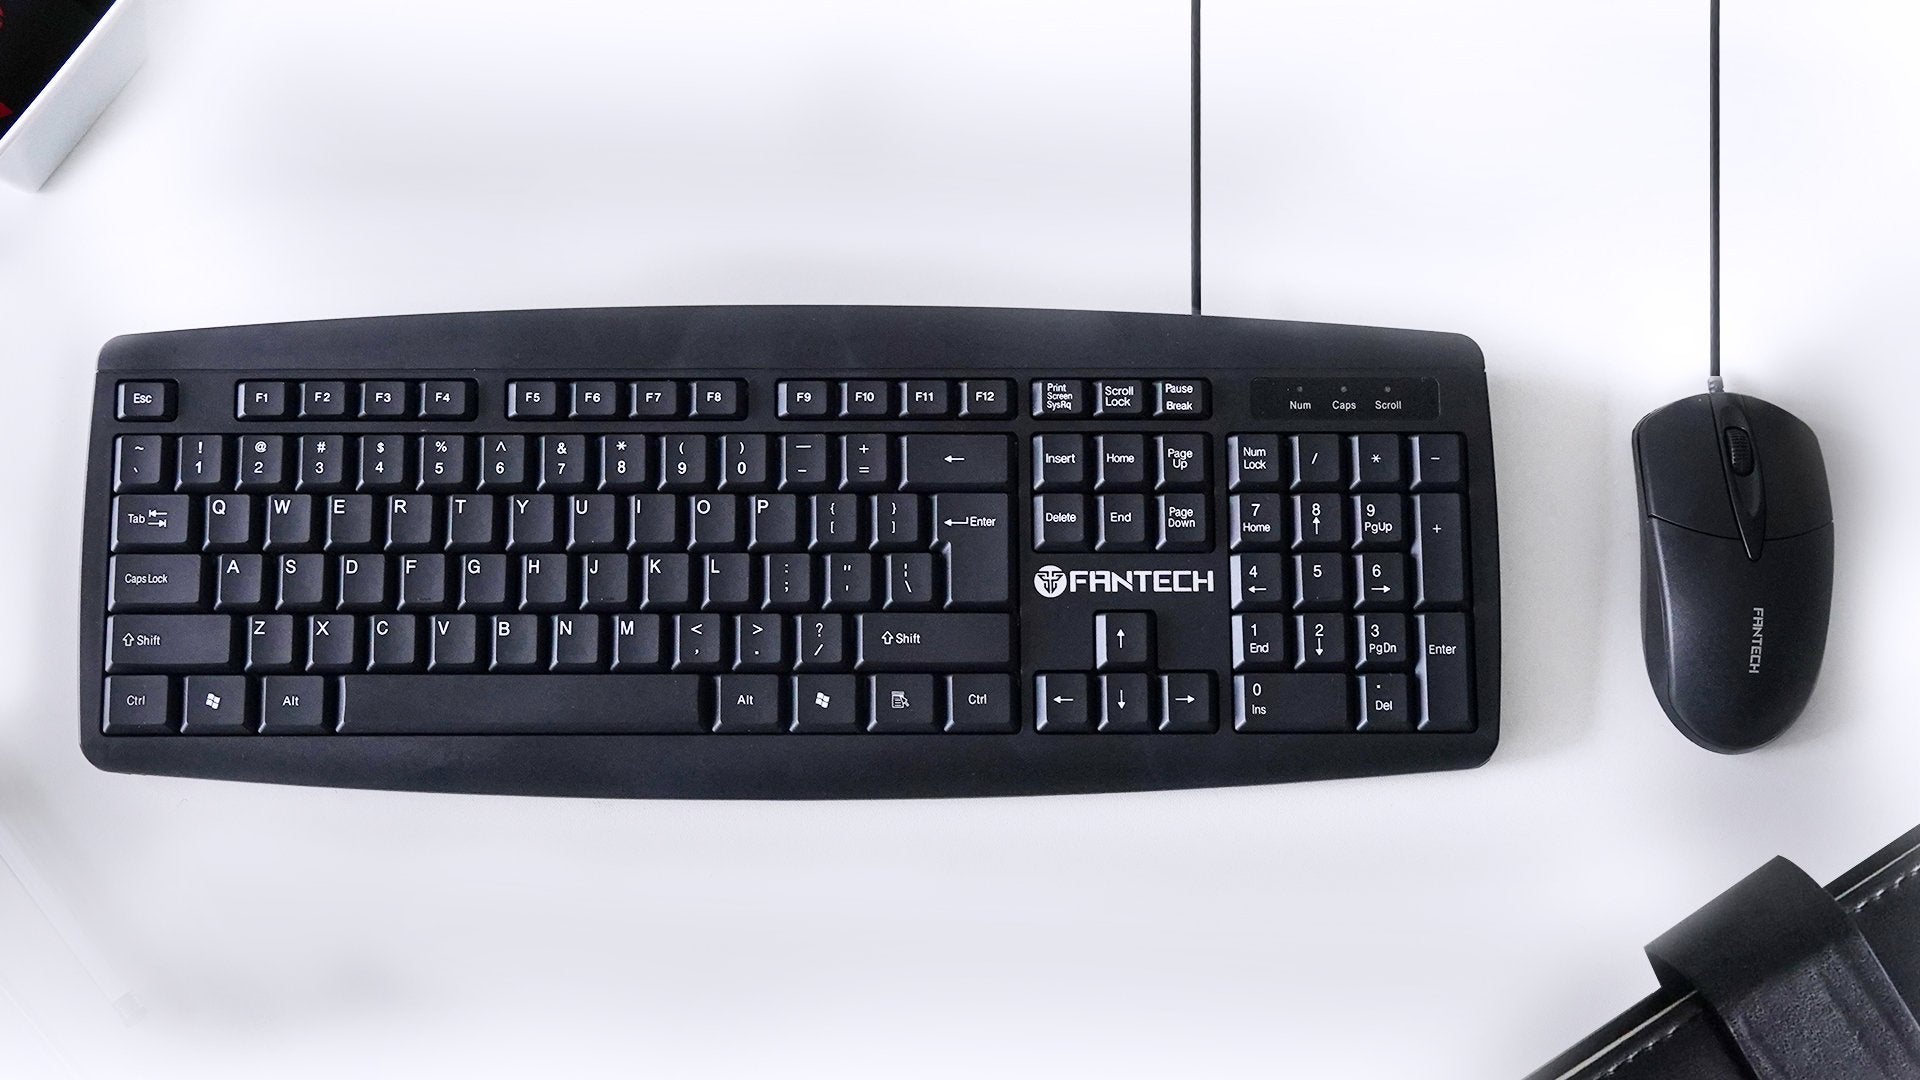 FANTECH KM100 Office Professional Keyboard Mouse Combo